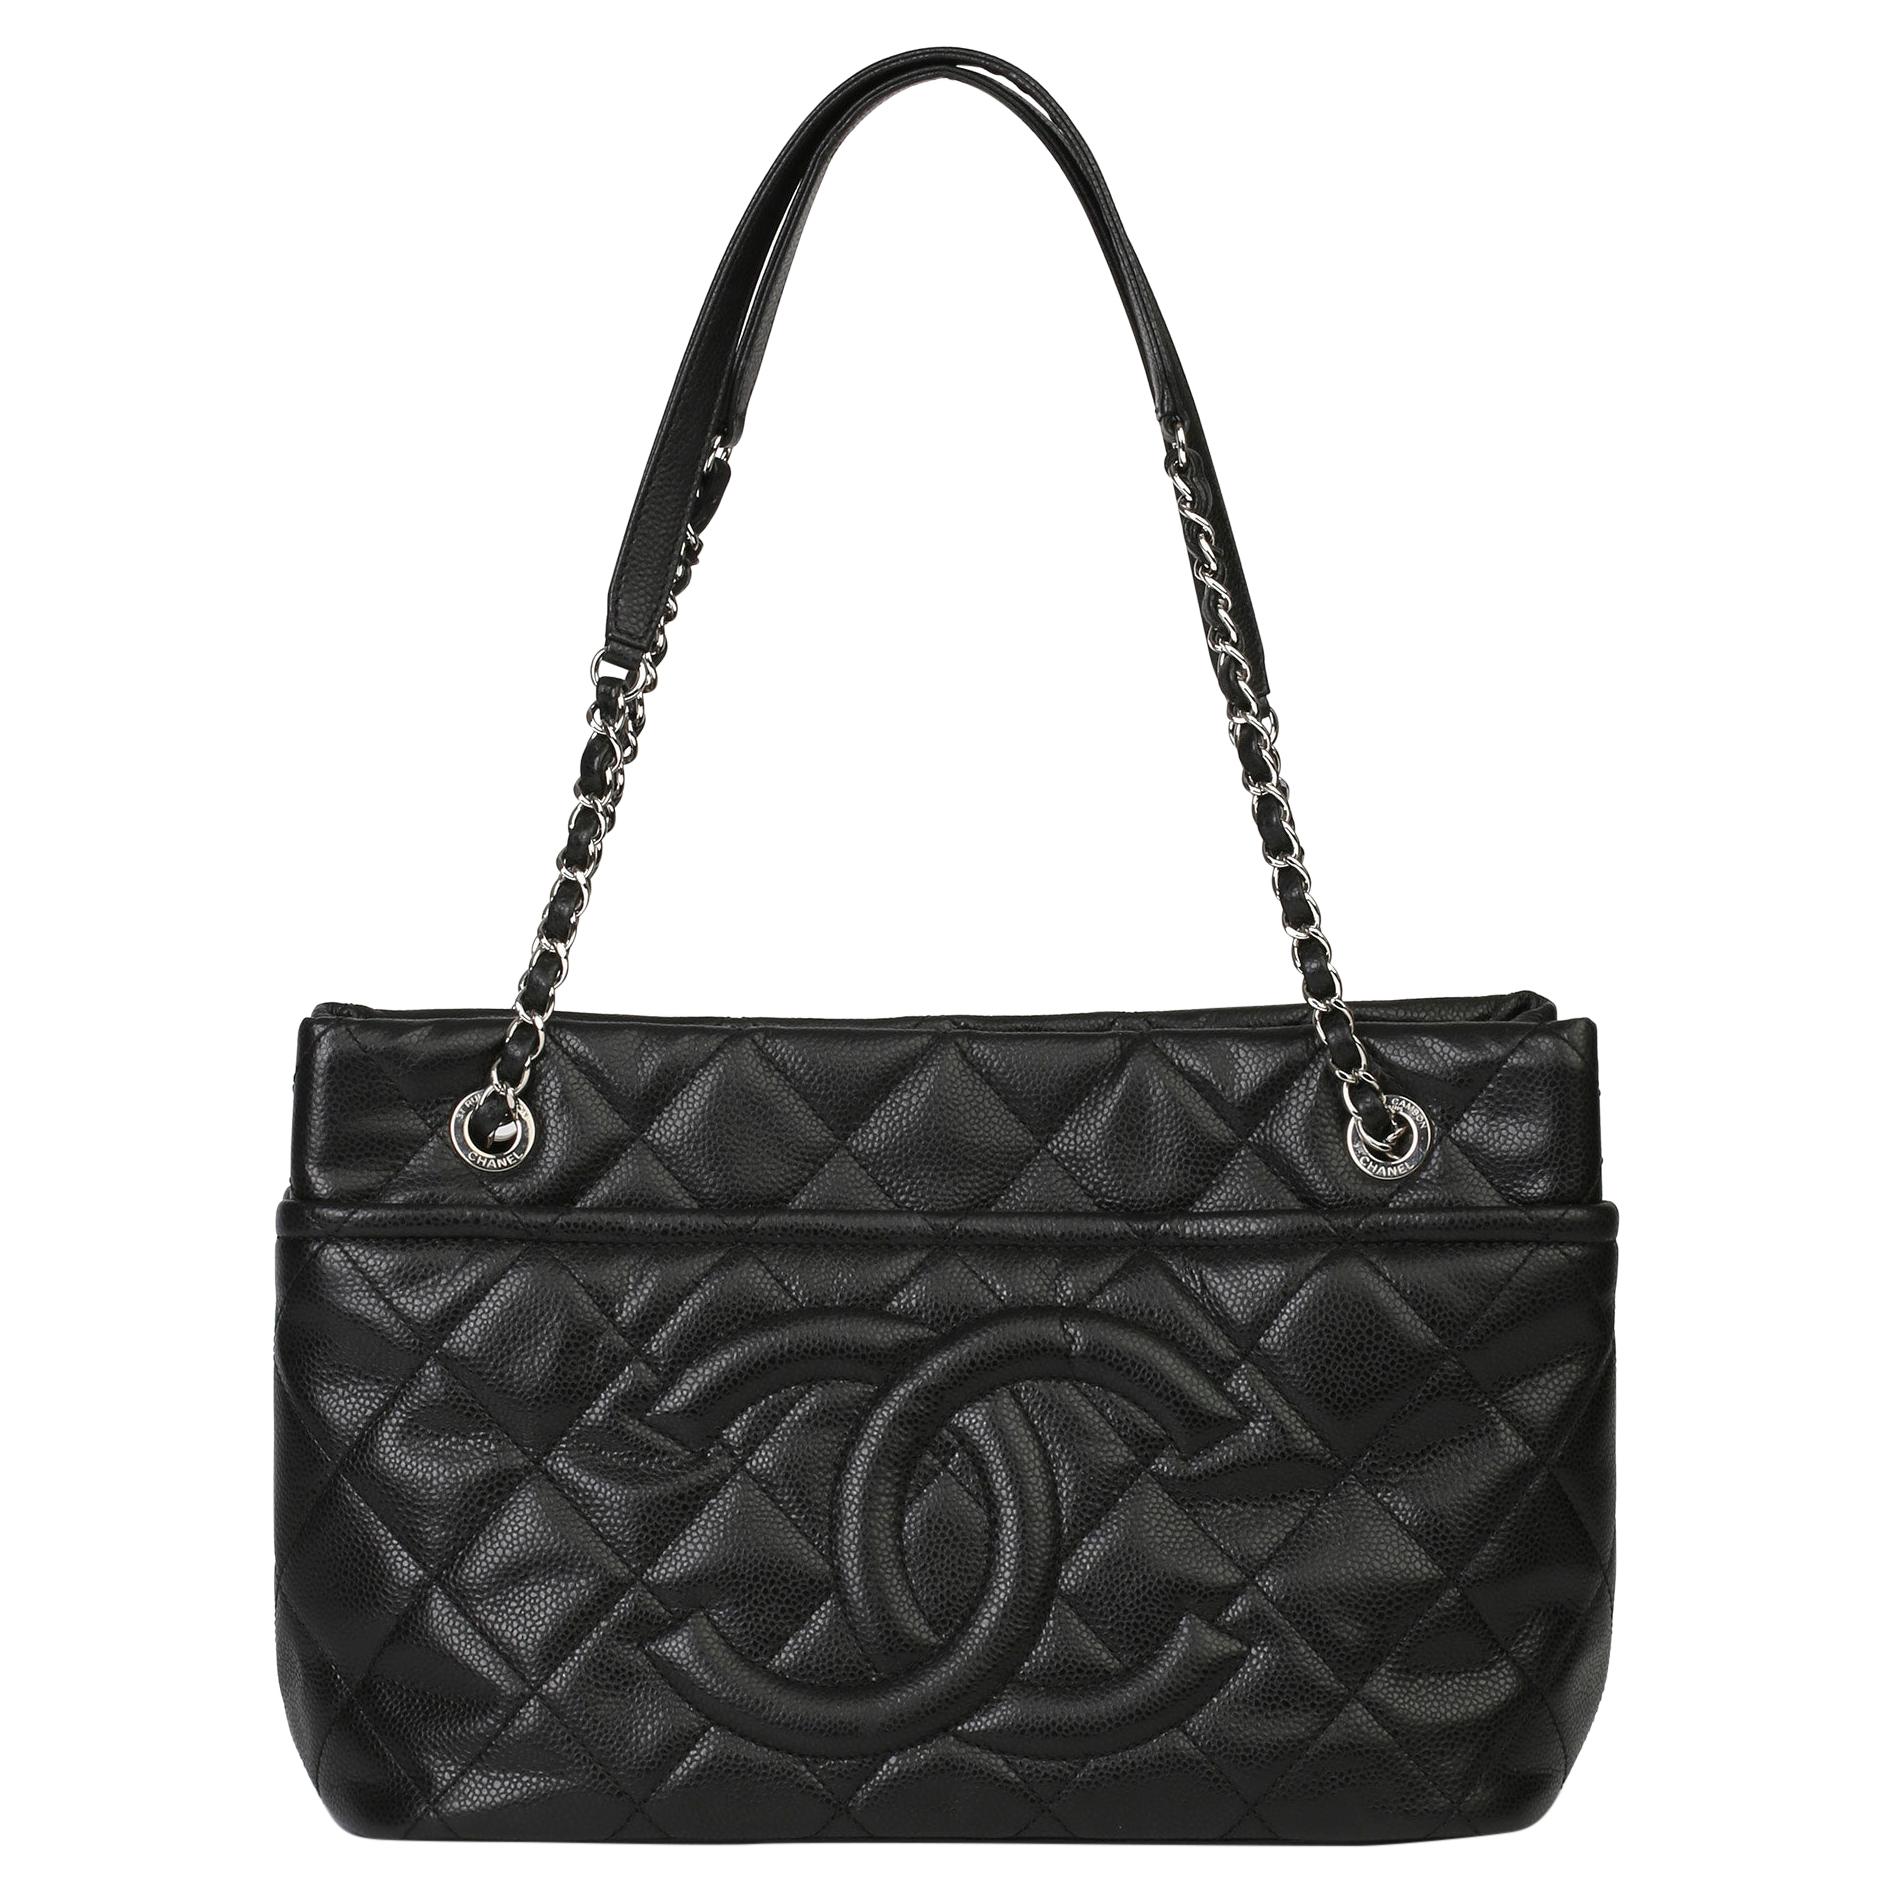 2012 Chanel Black Quilted Caviar Leather Timeless Shoulder Bag 